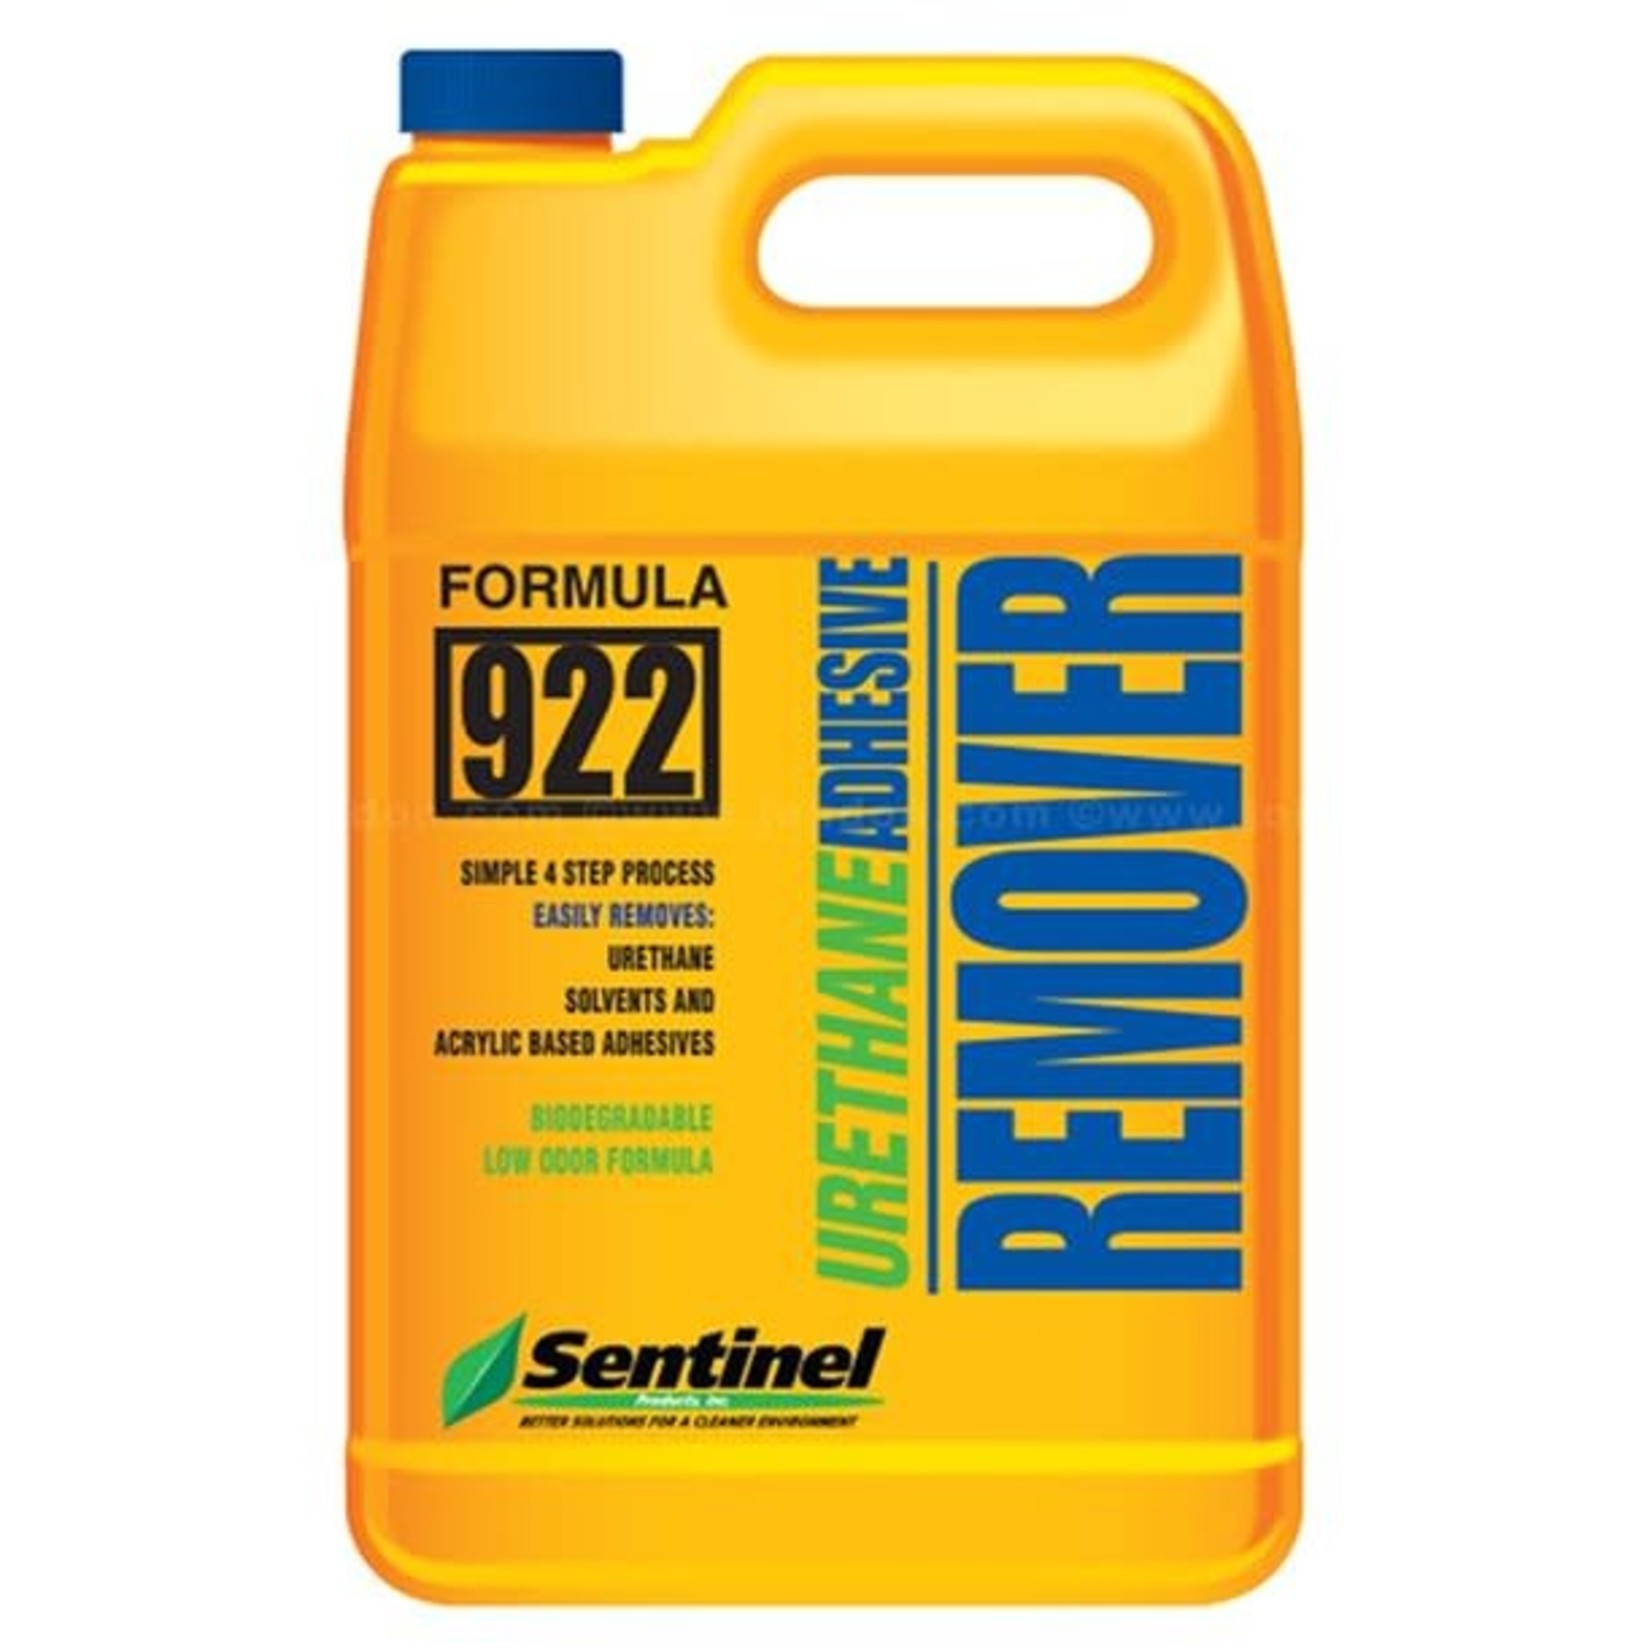 Sentinel Sentinel Formula 922 (Urethane Adhesive Remover) 1 Gallon